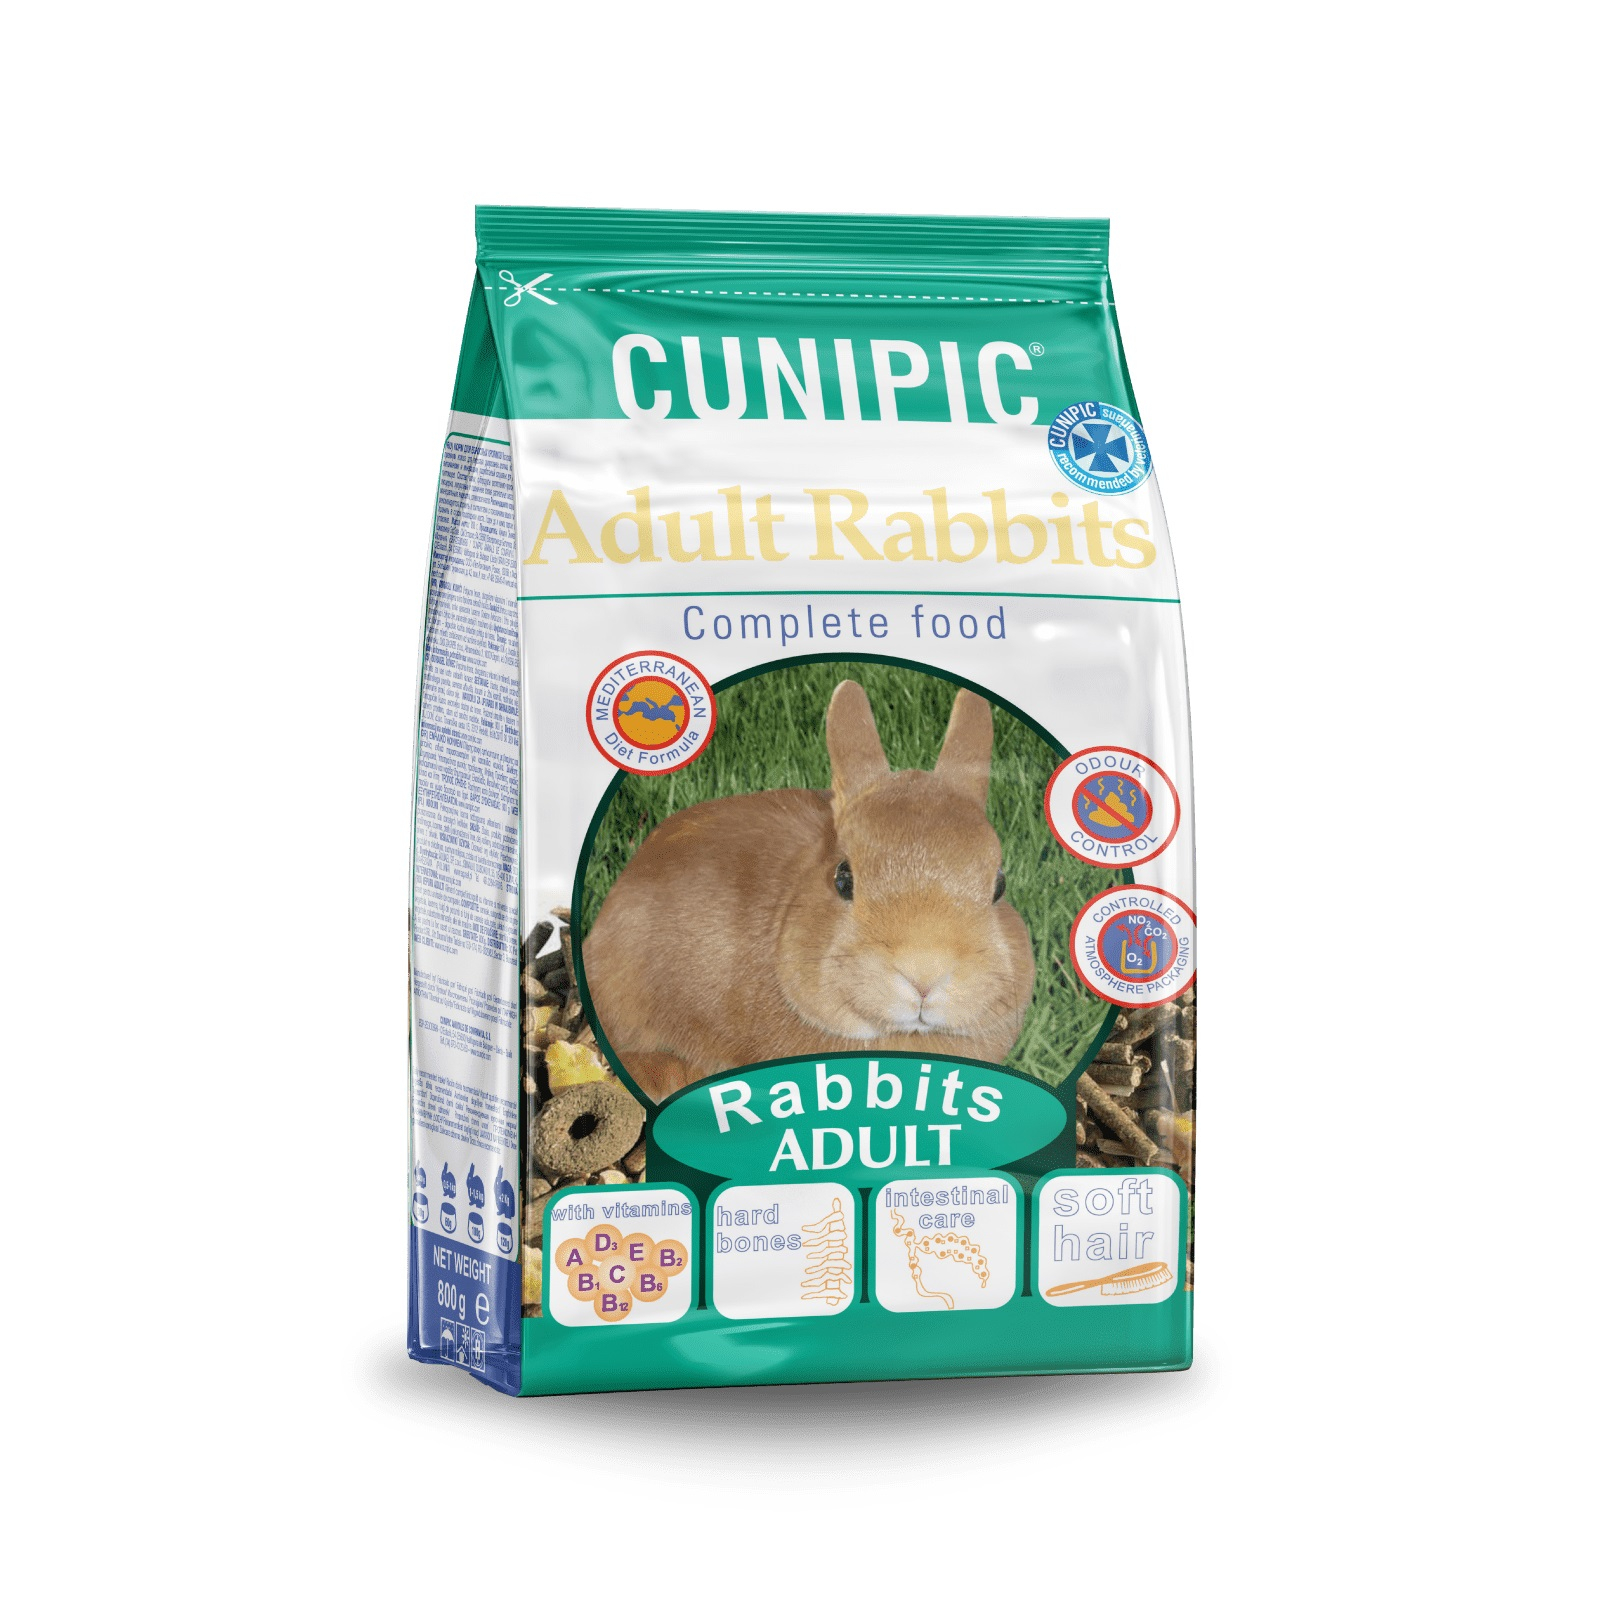 Cunipic Premium Alimento completo para conejos adultos